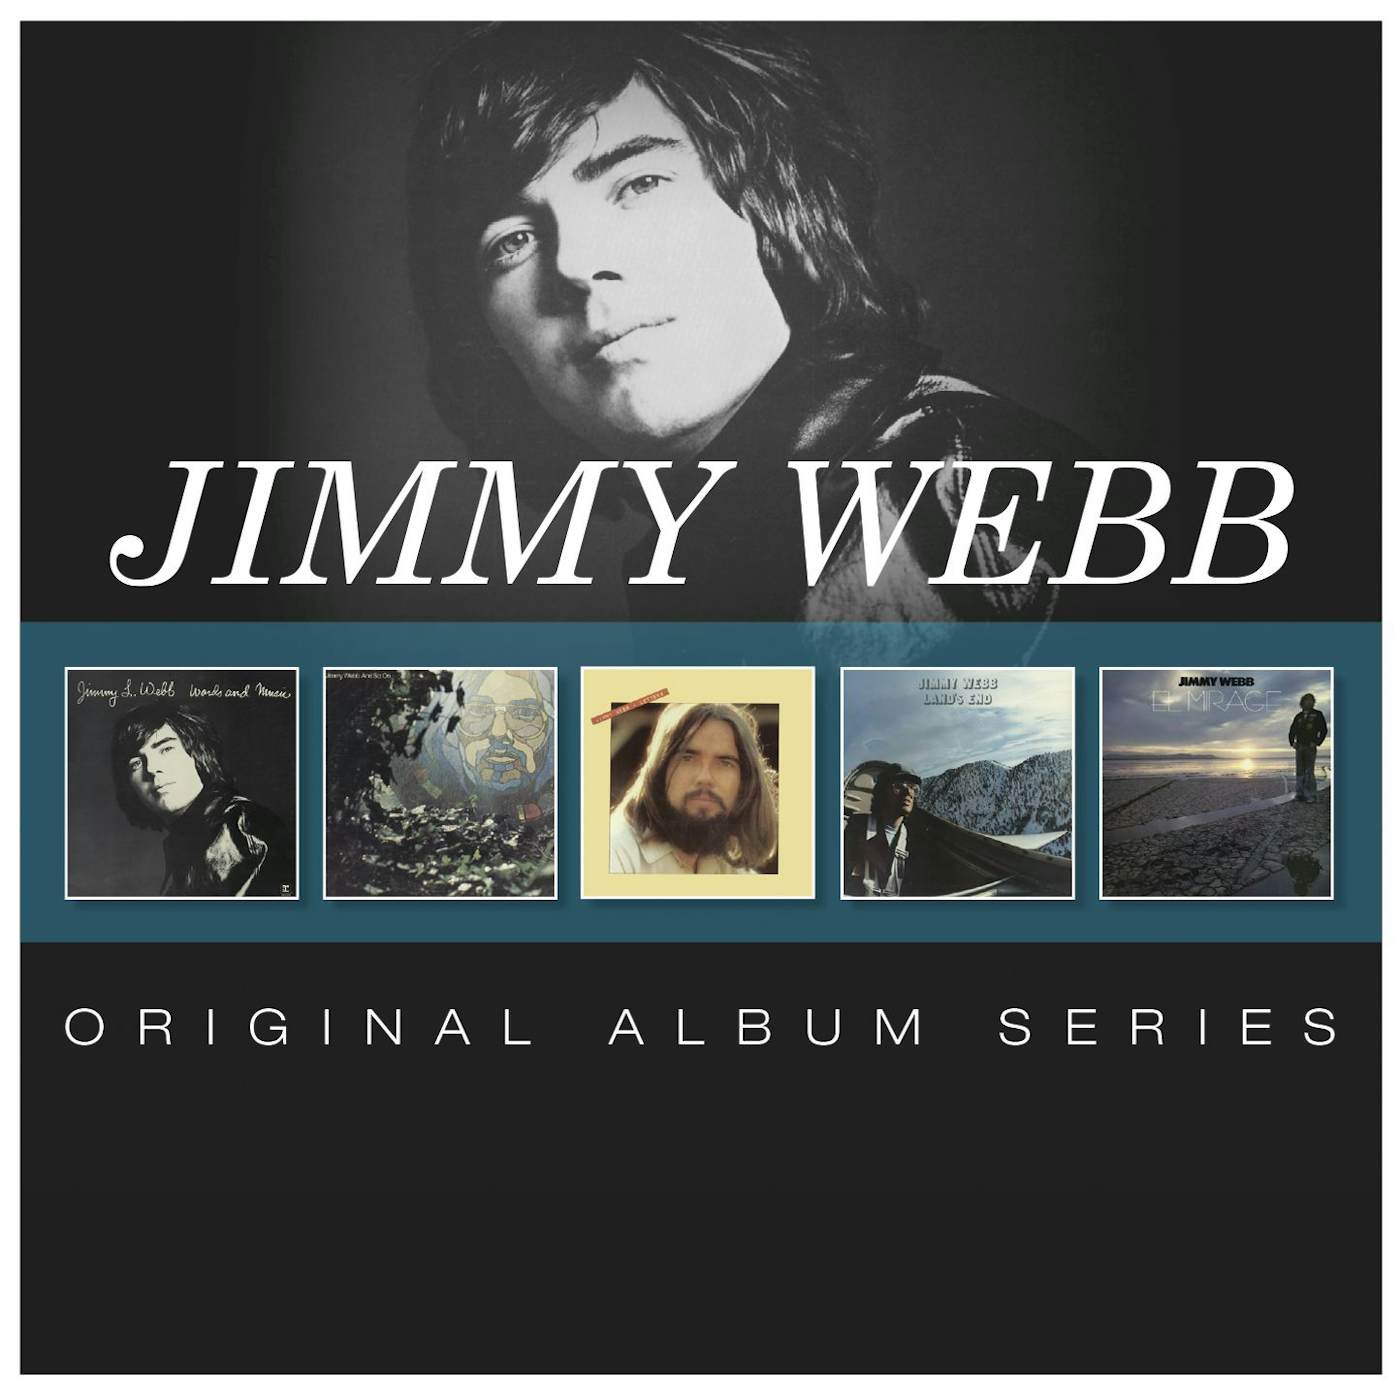 Jimmy Webb ORIGINAL ALBUM SERIES CD